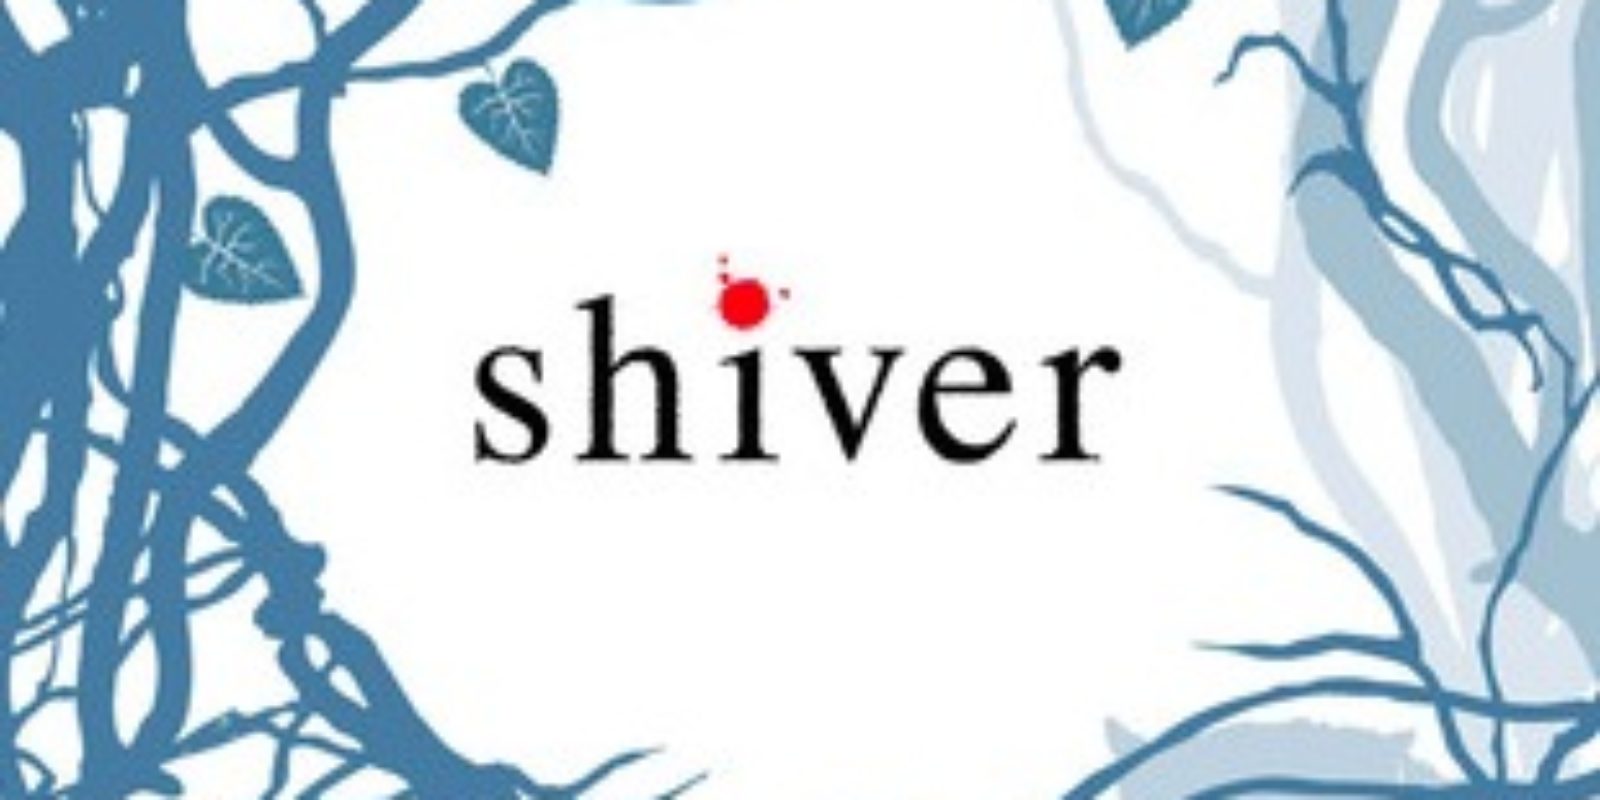 Shiver cover